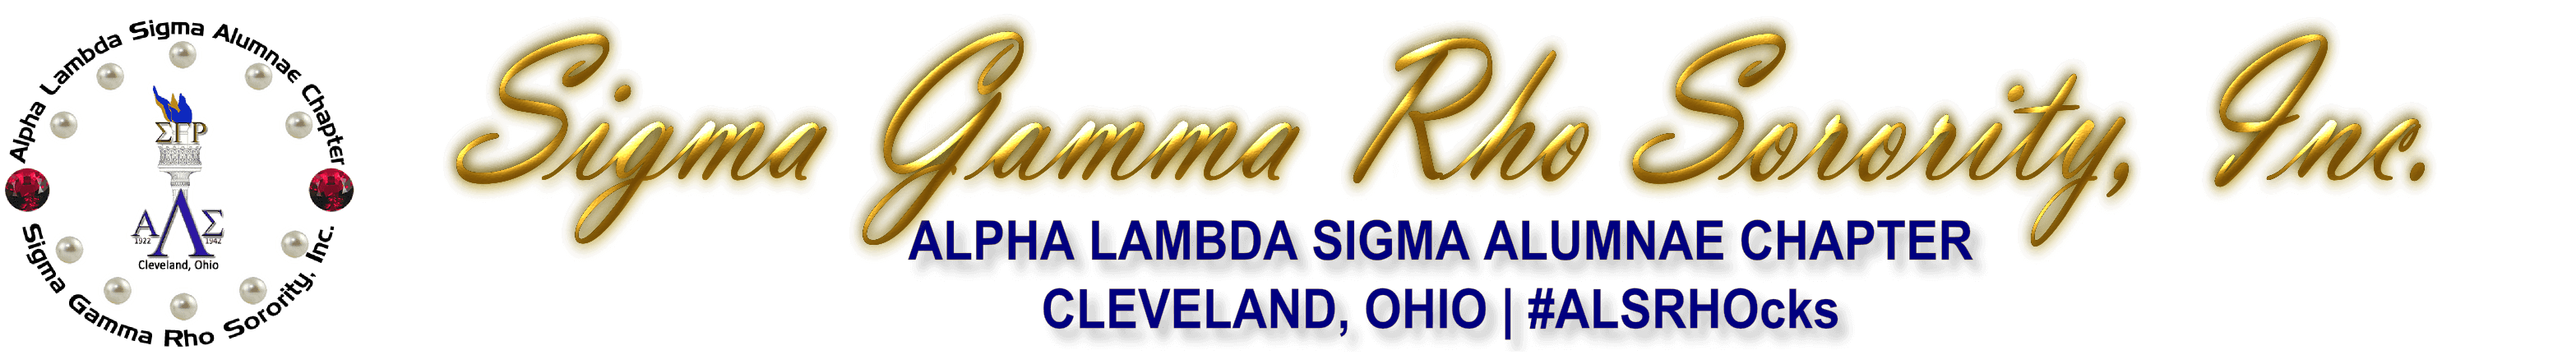 Sigma Gamma Rho Sorority, Inc. – Alpha Lambda Sigma Alumnae Chapter - Cleveland OH